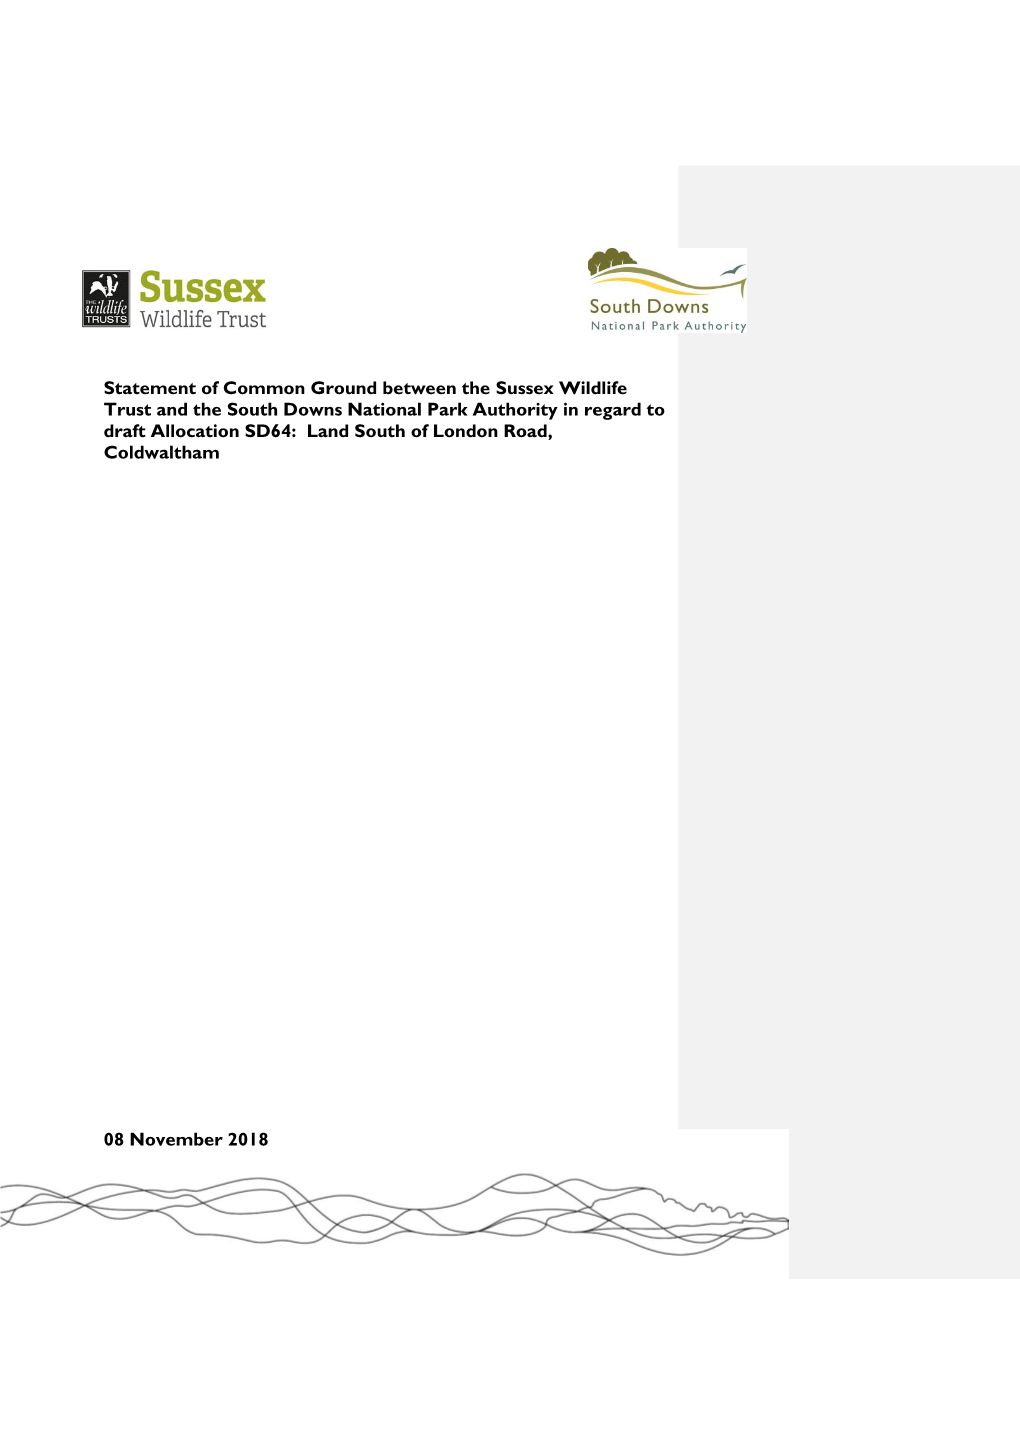 Statement of Common Ground Between the Sussex Wildlife Trust